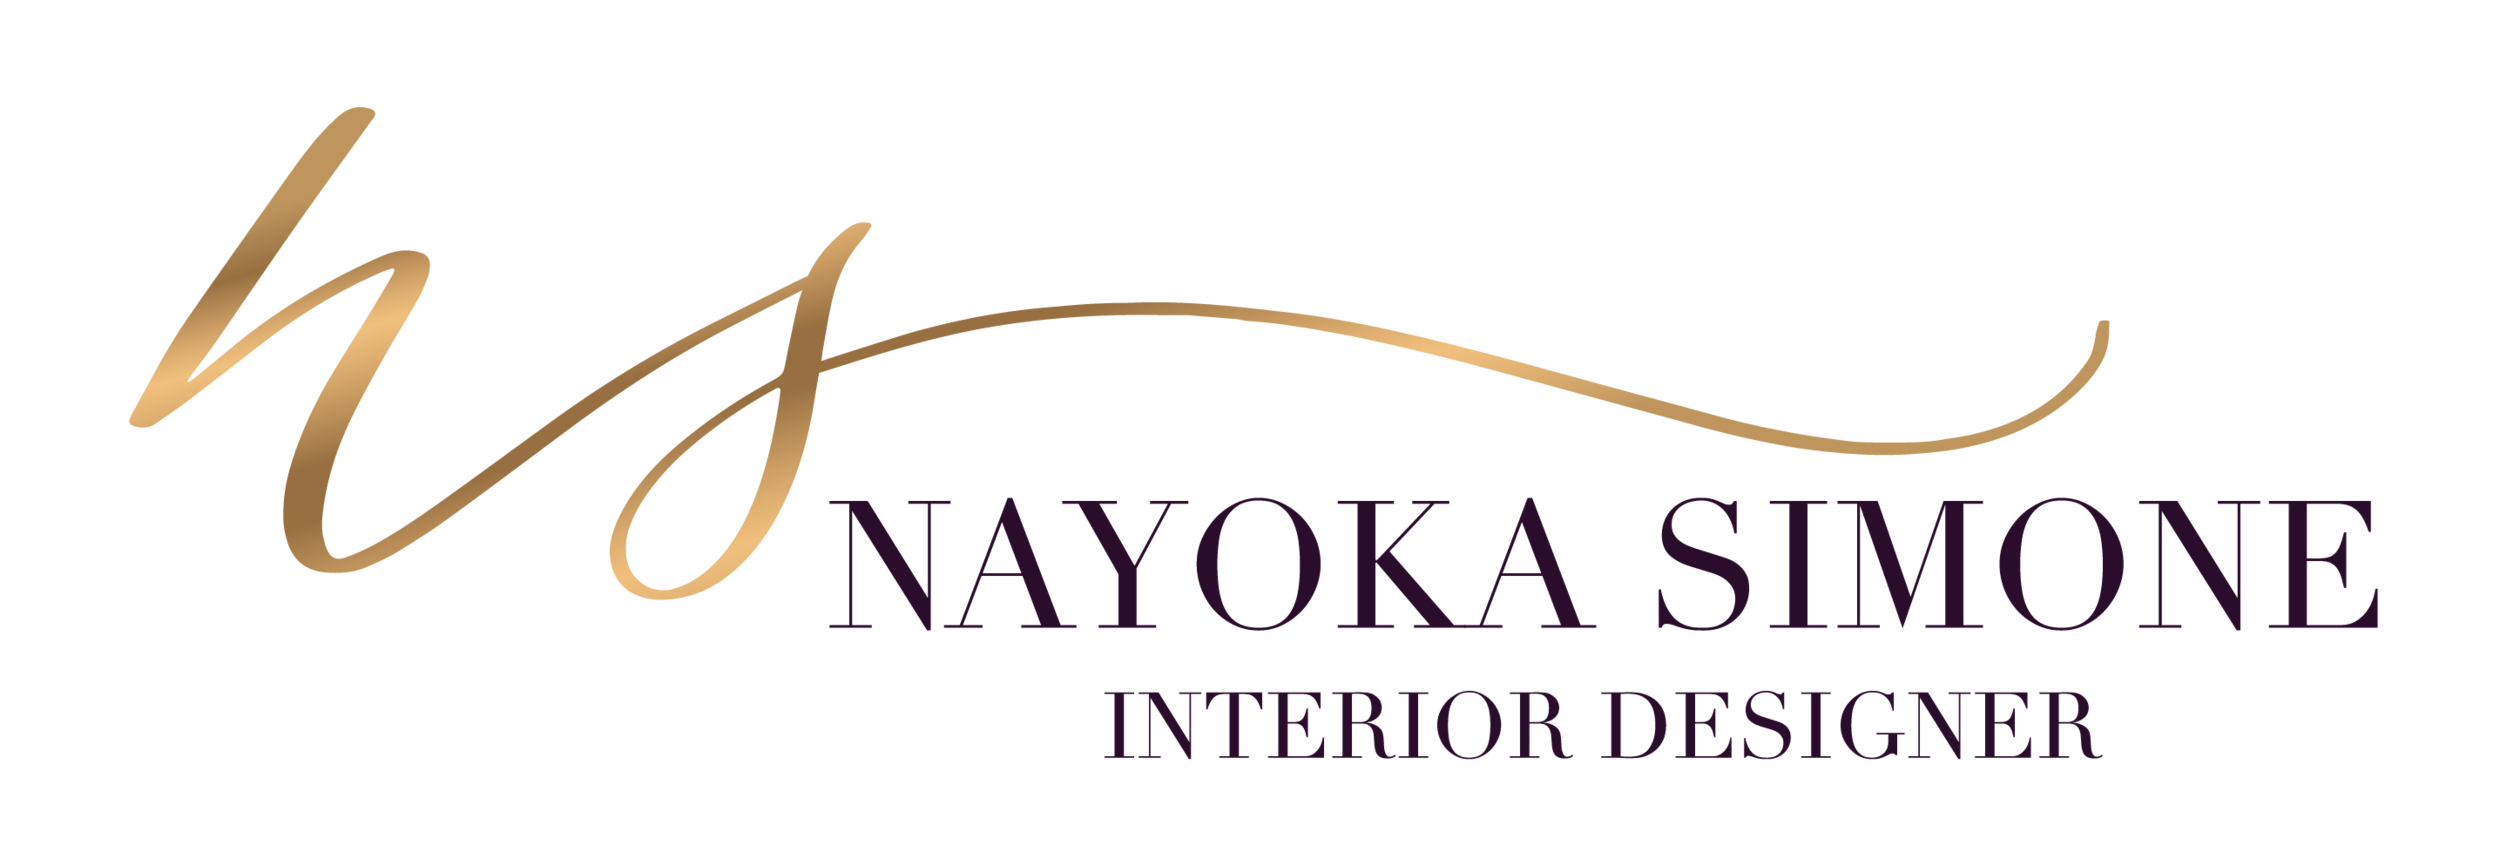 NAYOKA SIMONE-INTERIOR DESIGNER, AUTHOR, INFLUENCER